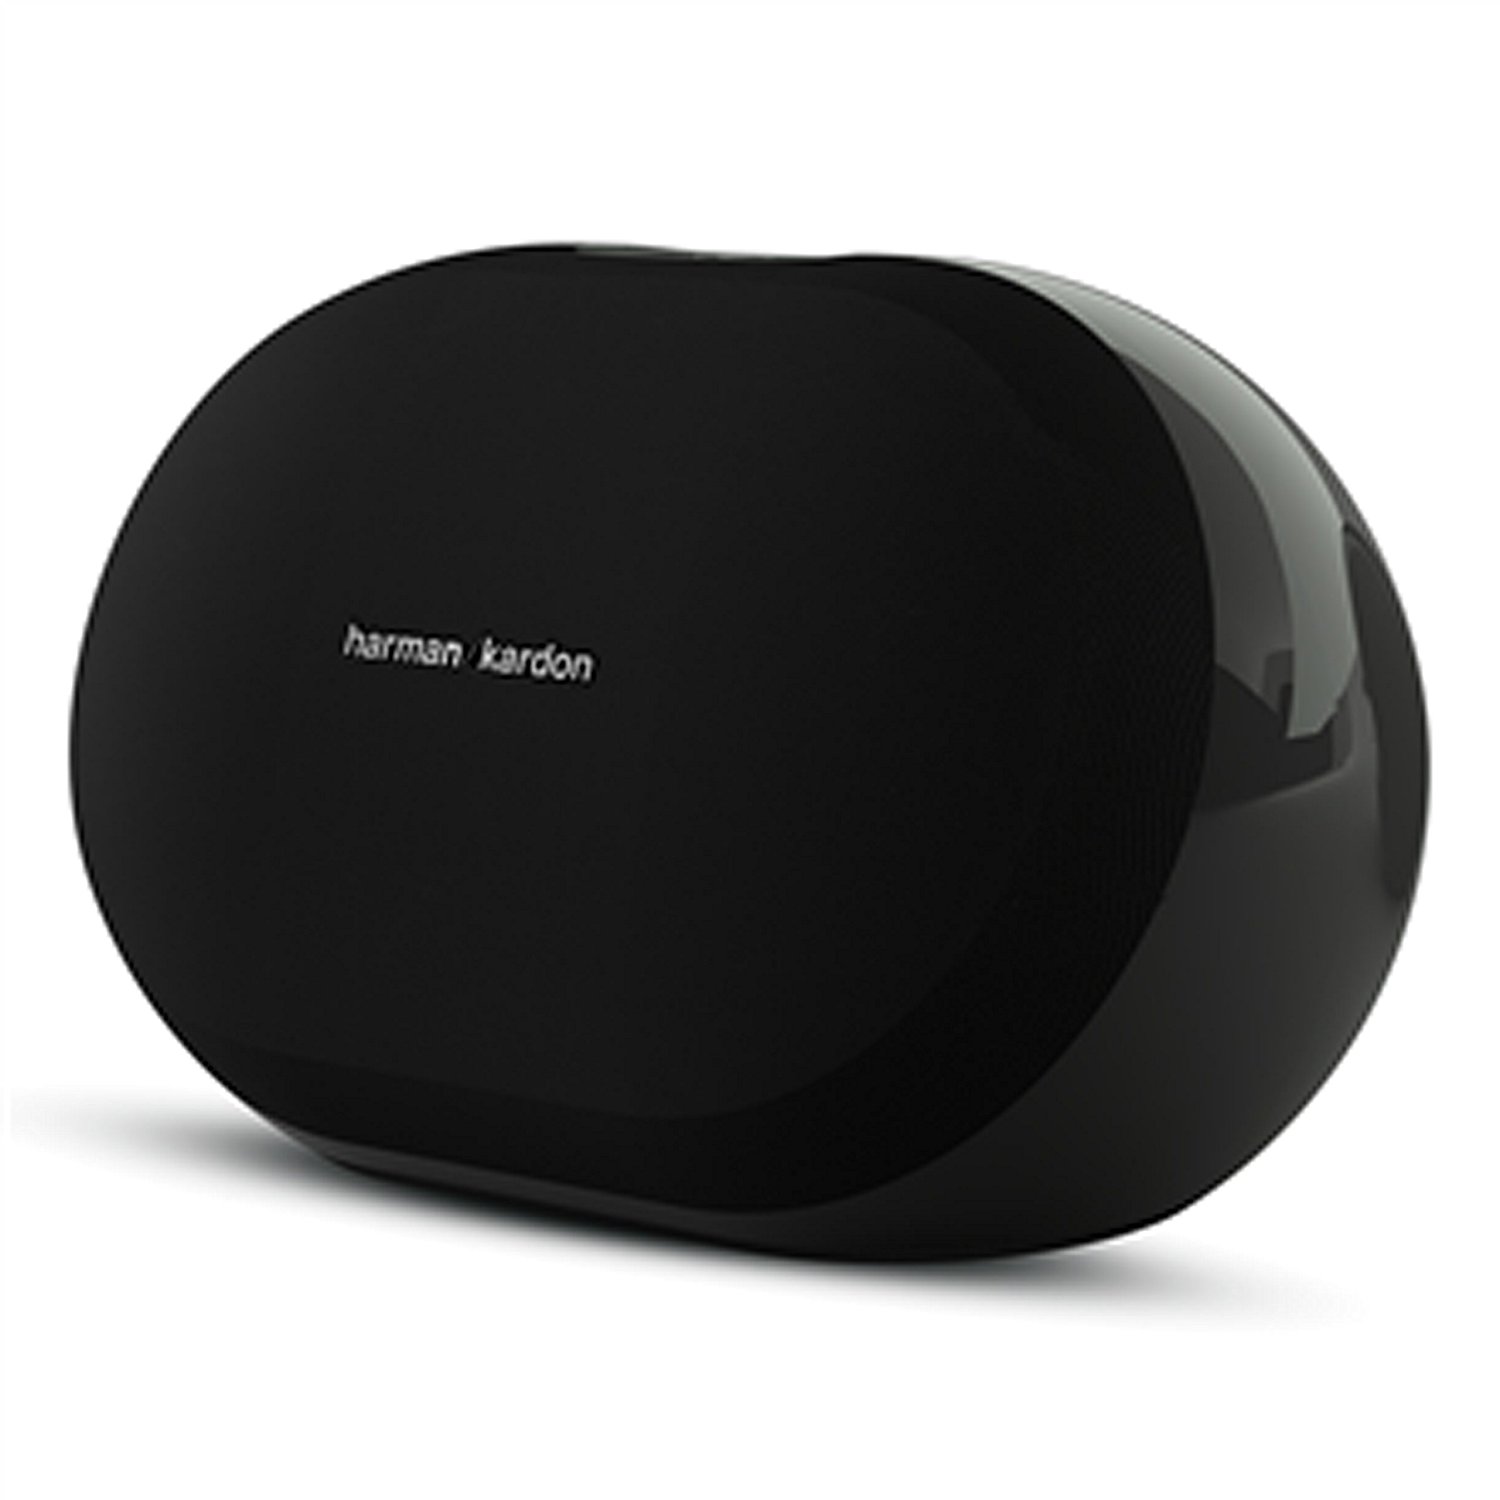 Black Omni 20 Plus Harman Kardon Wireless HD Wireless Audio System Adapter Renewed 